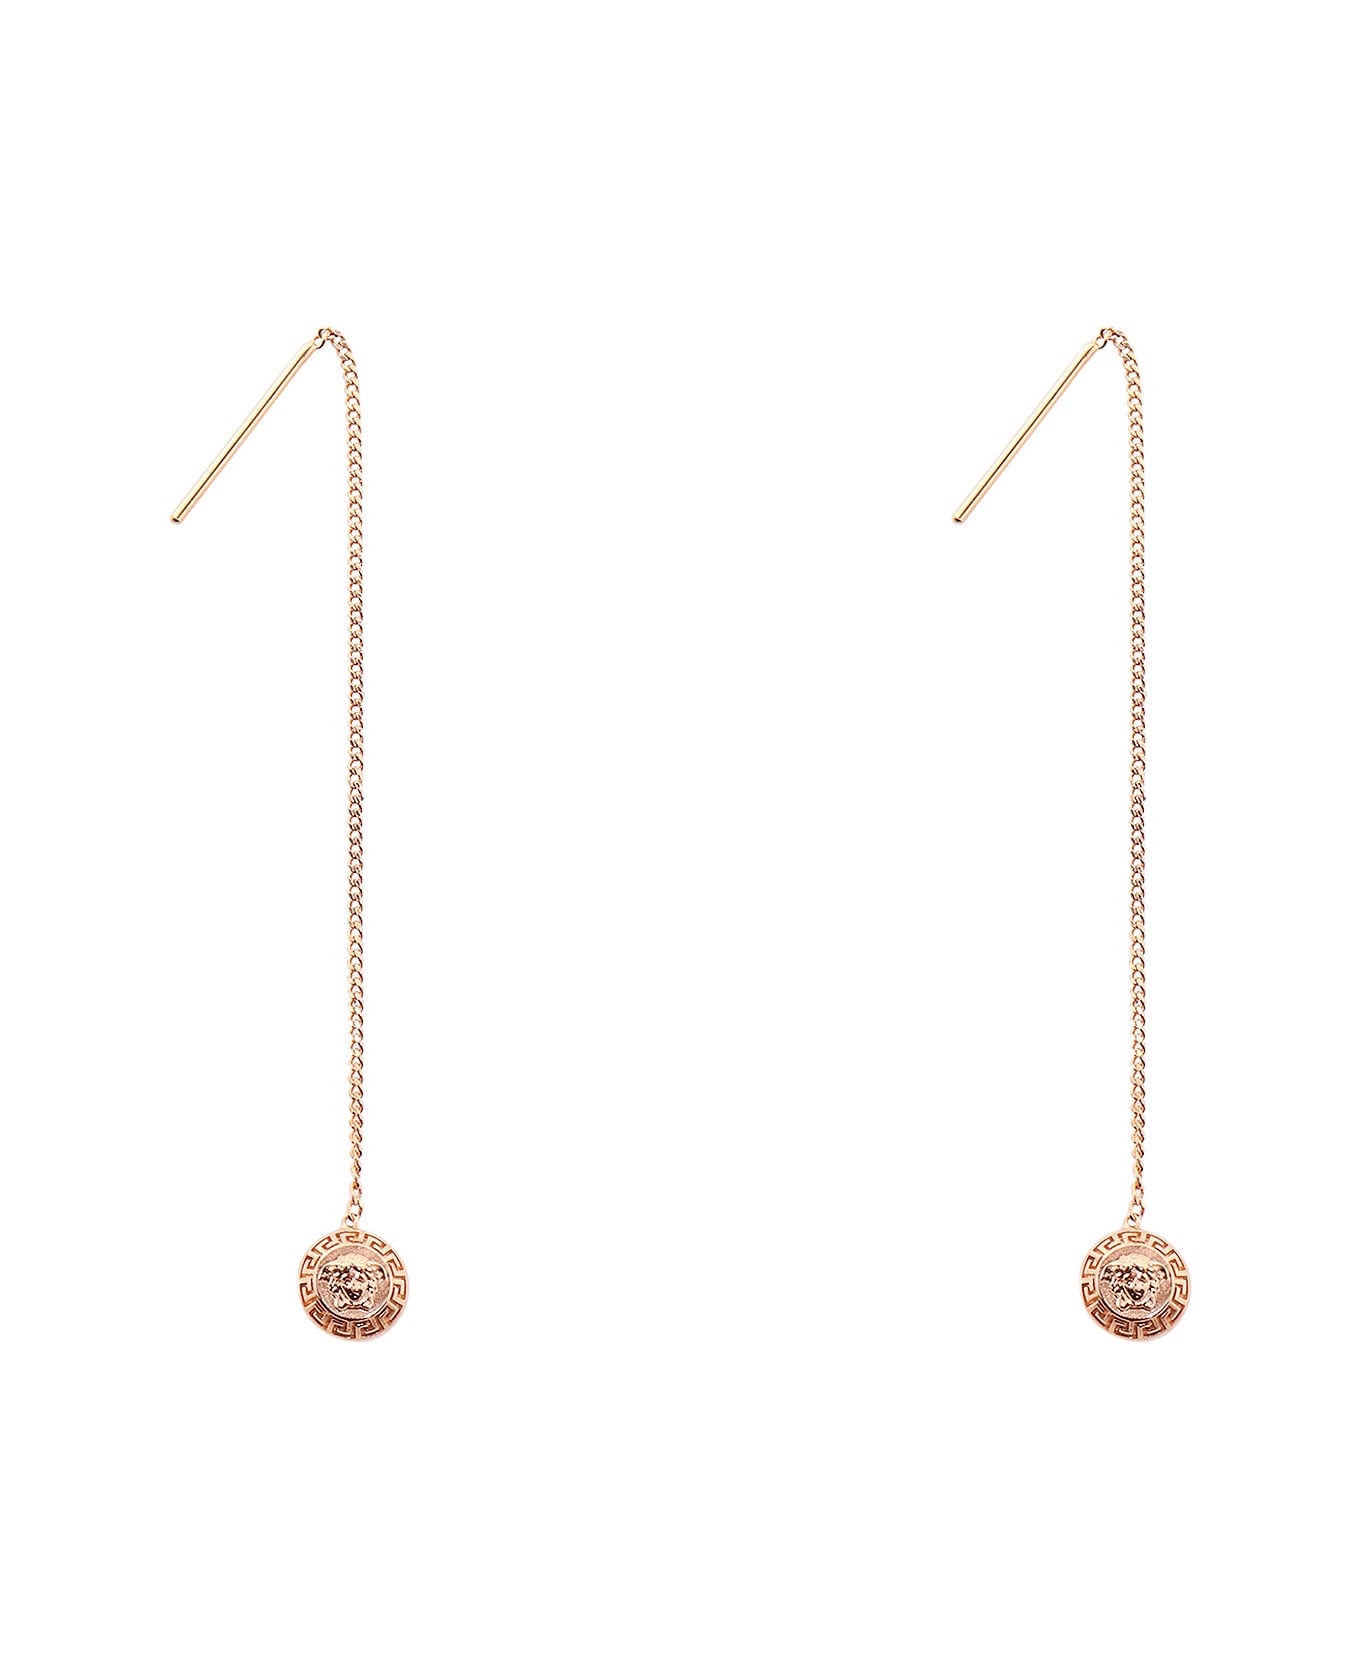 Versace Earrings - Gold